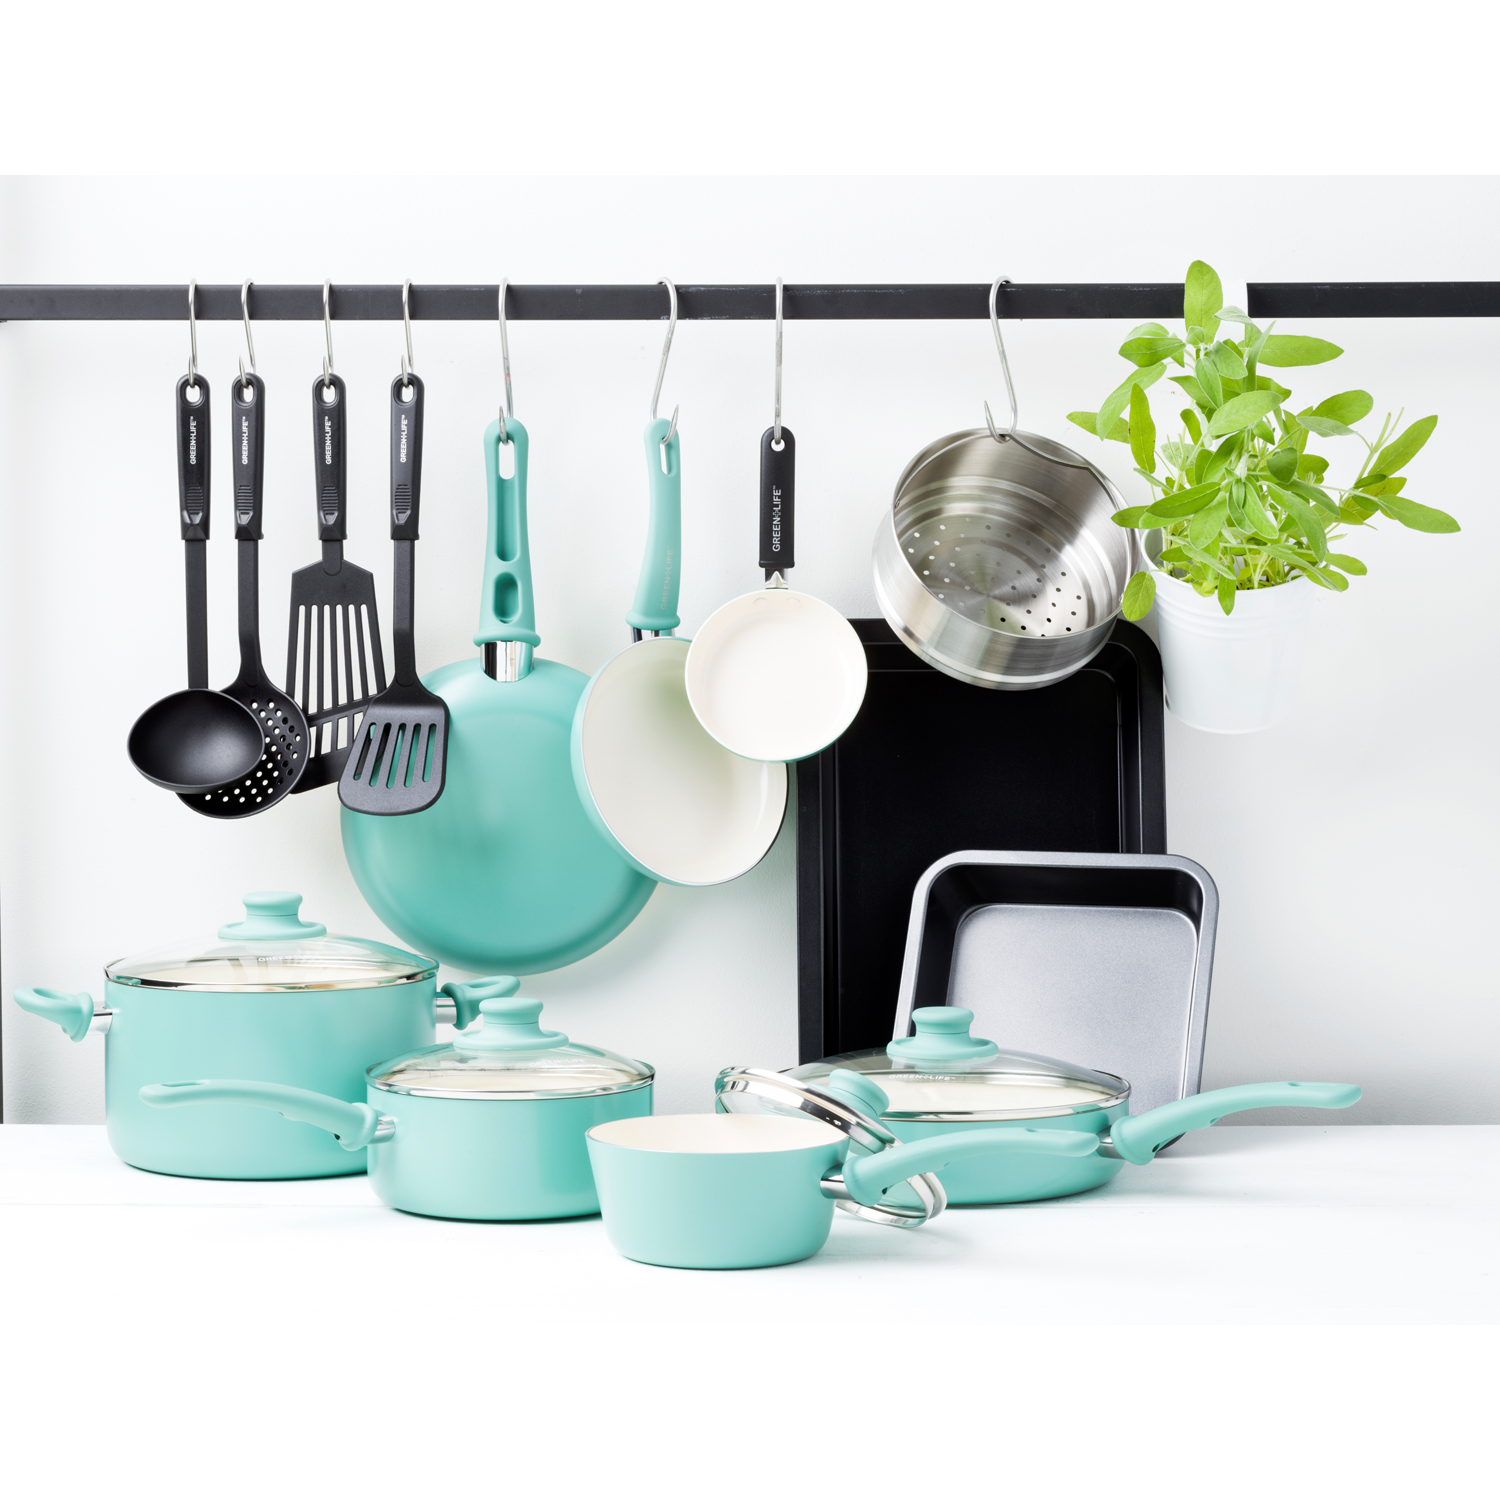 GreenLife Chef’s Essentials ceramic non-stick 18-piece cookware set for $49